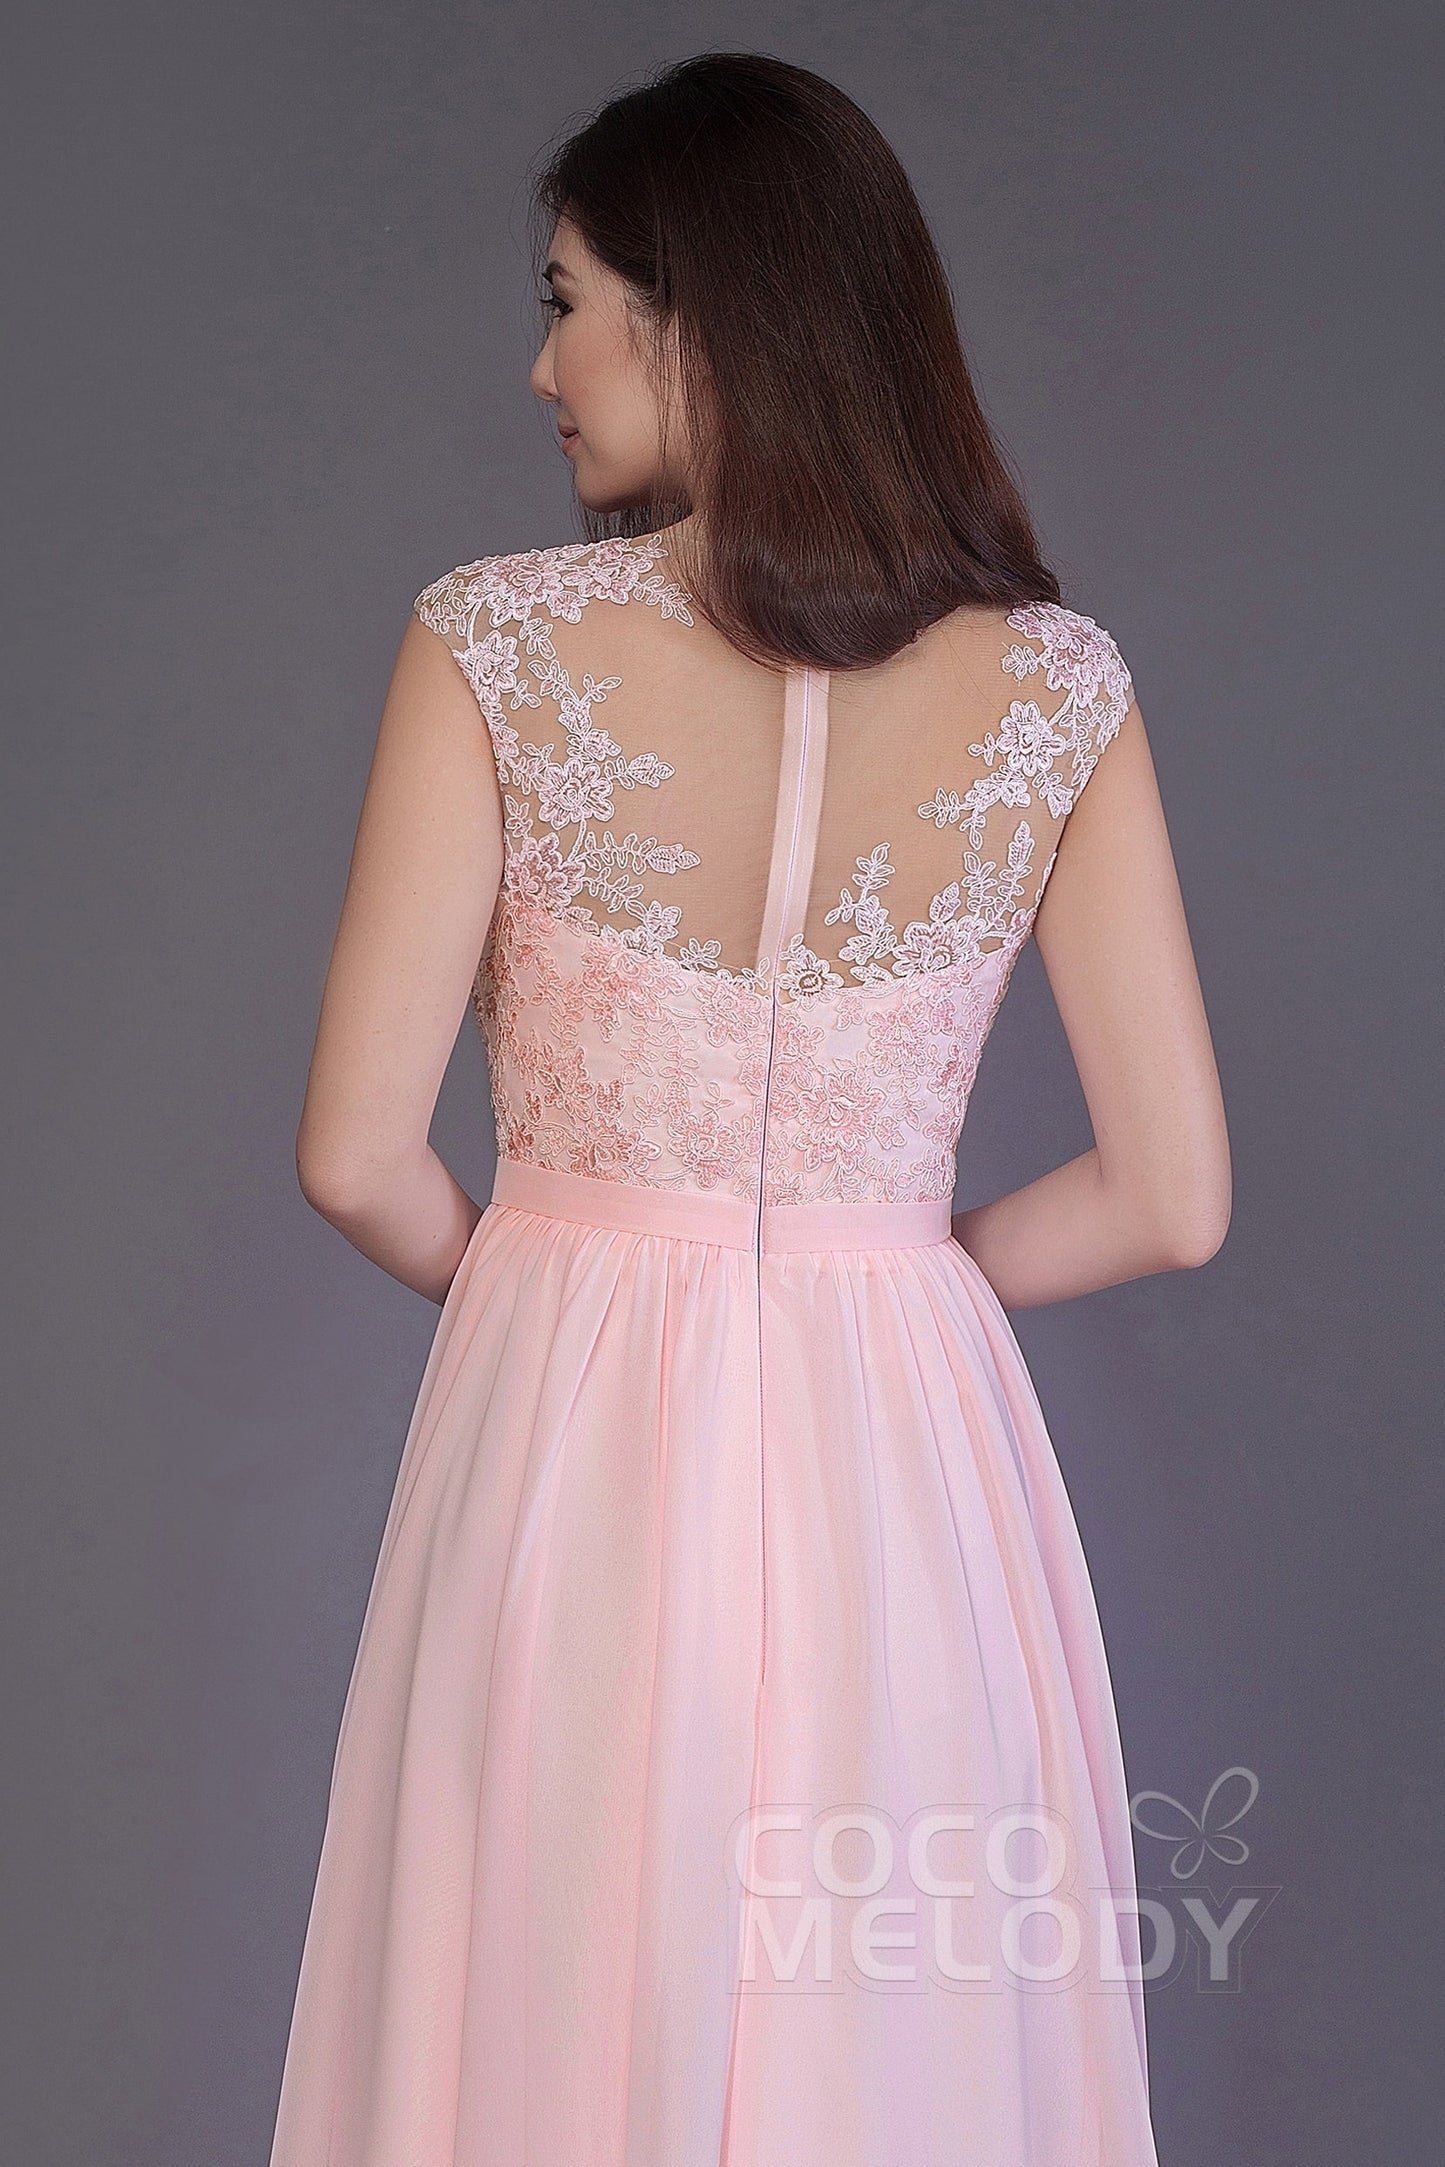 Sheath Floor Length Chiffon and Lace Bridesmaid Dress PR3554